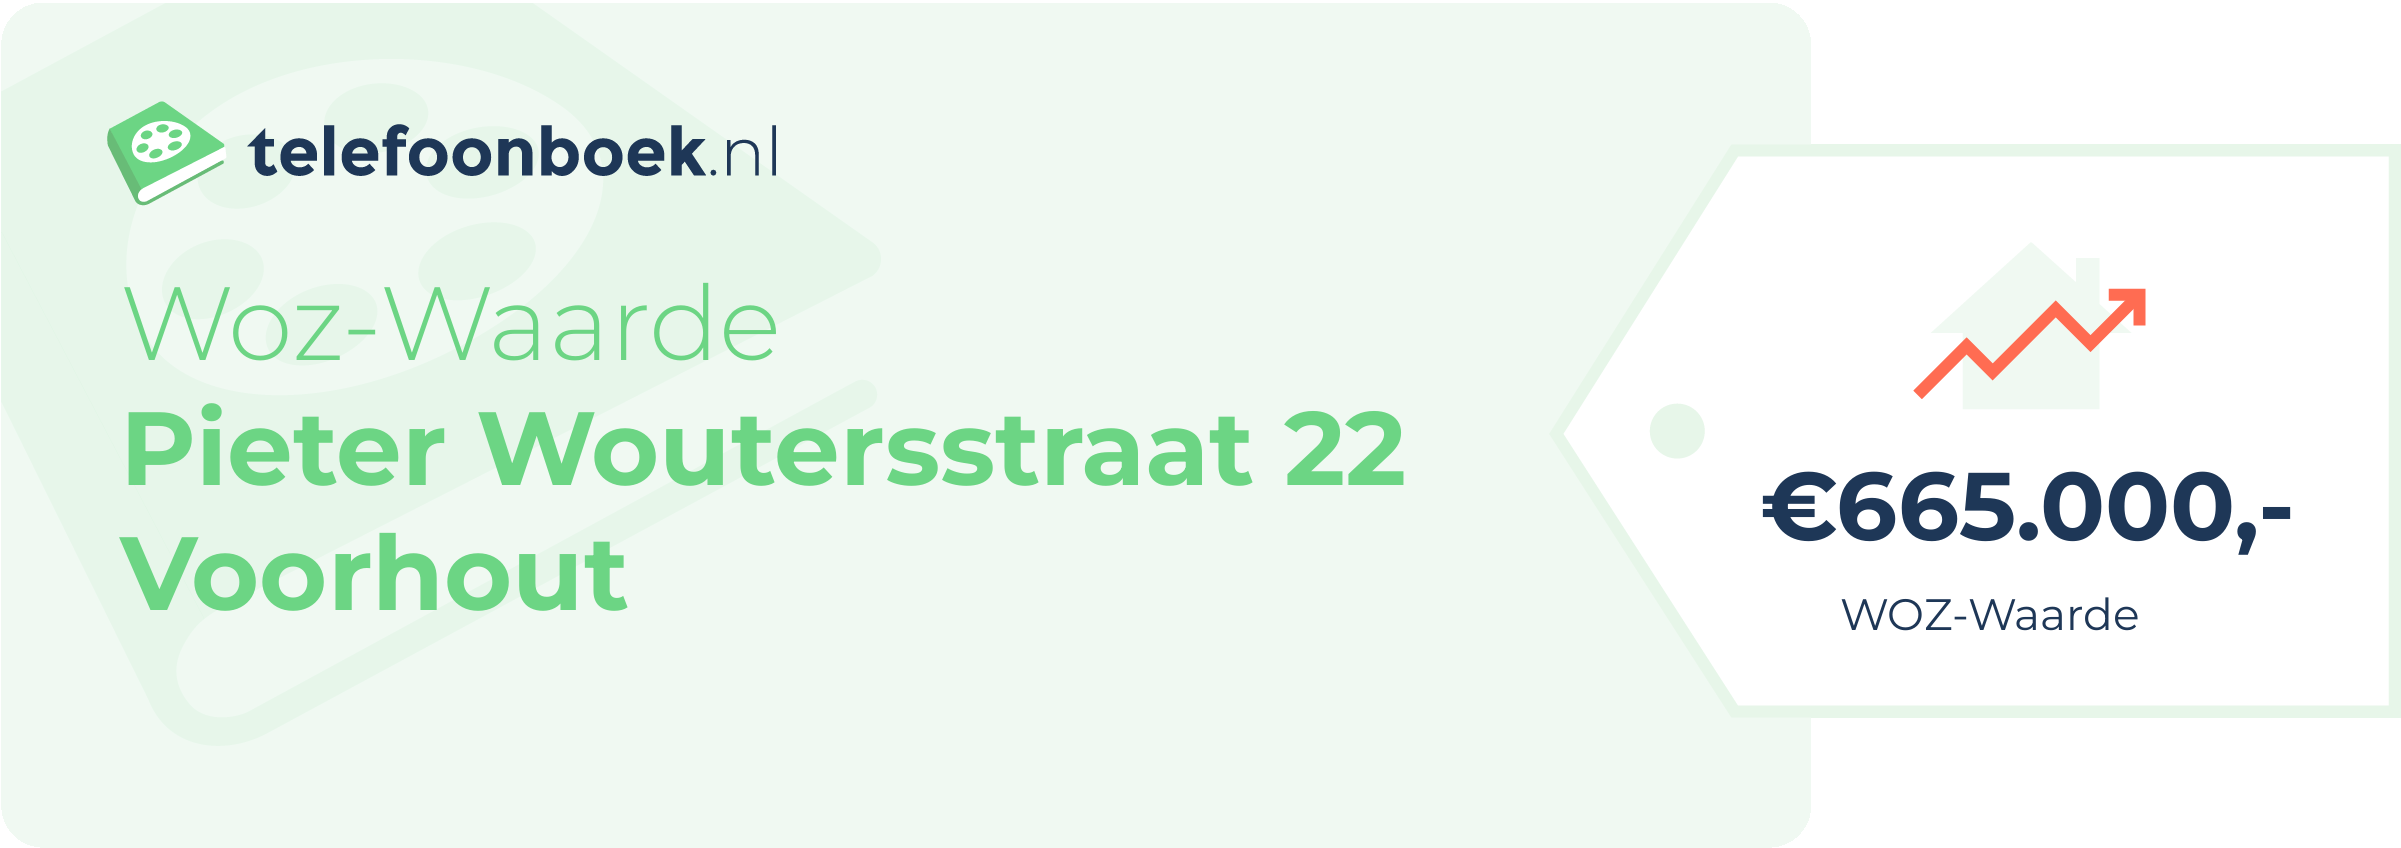 WOZ-waarde Pieter Woutersstraat 22 Voorhout